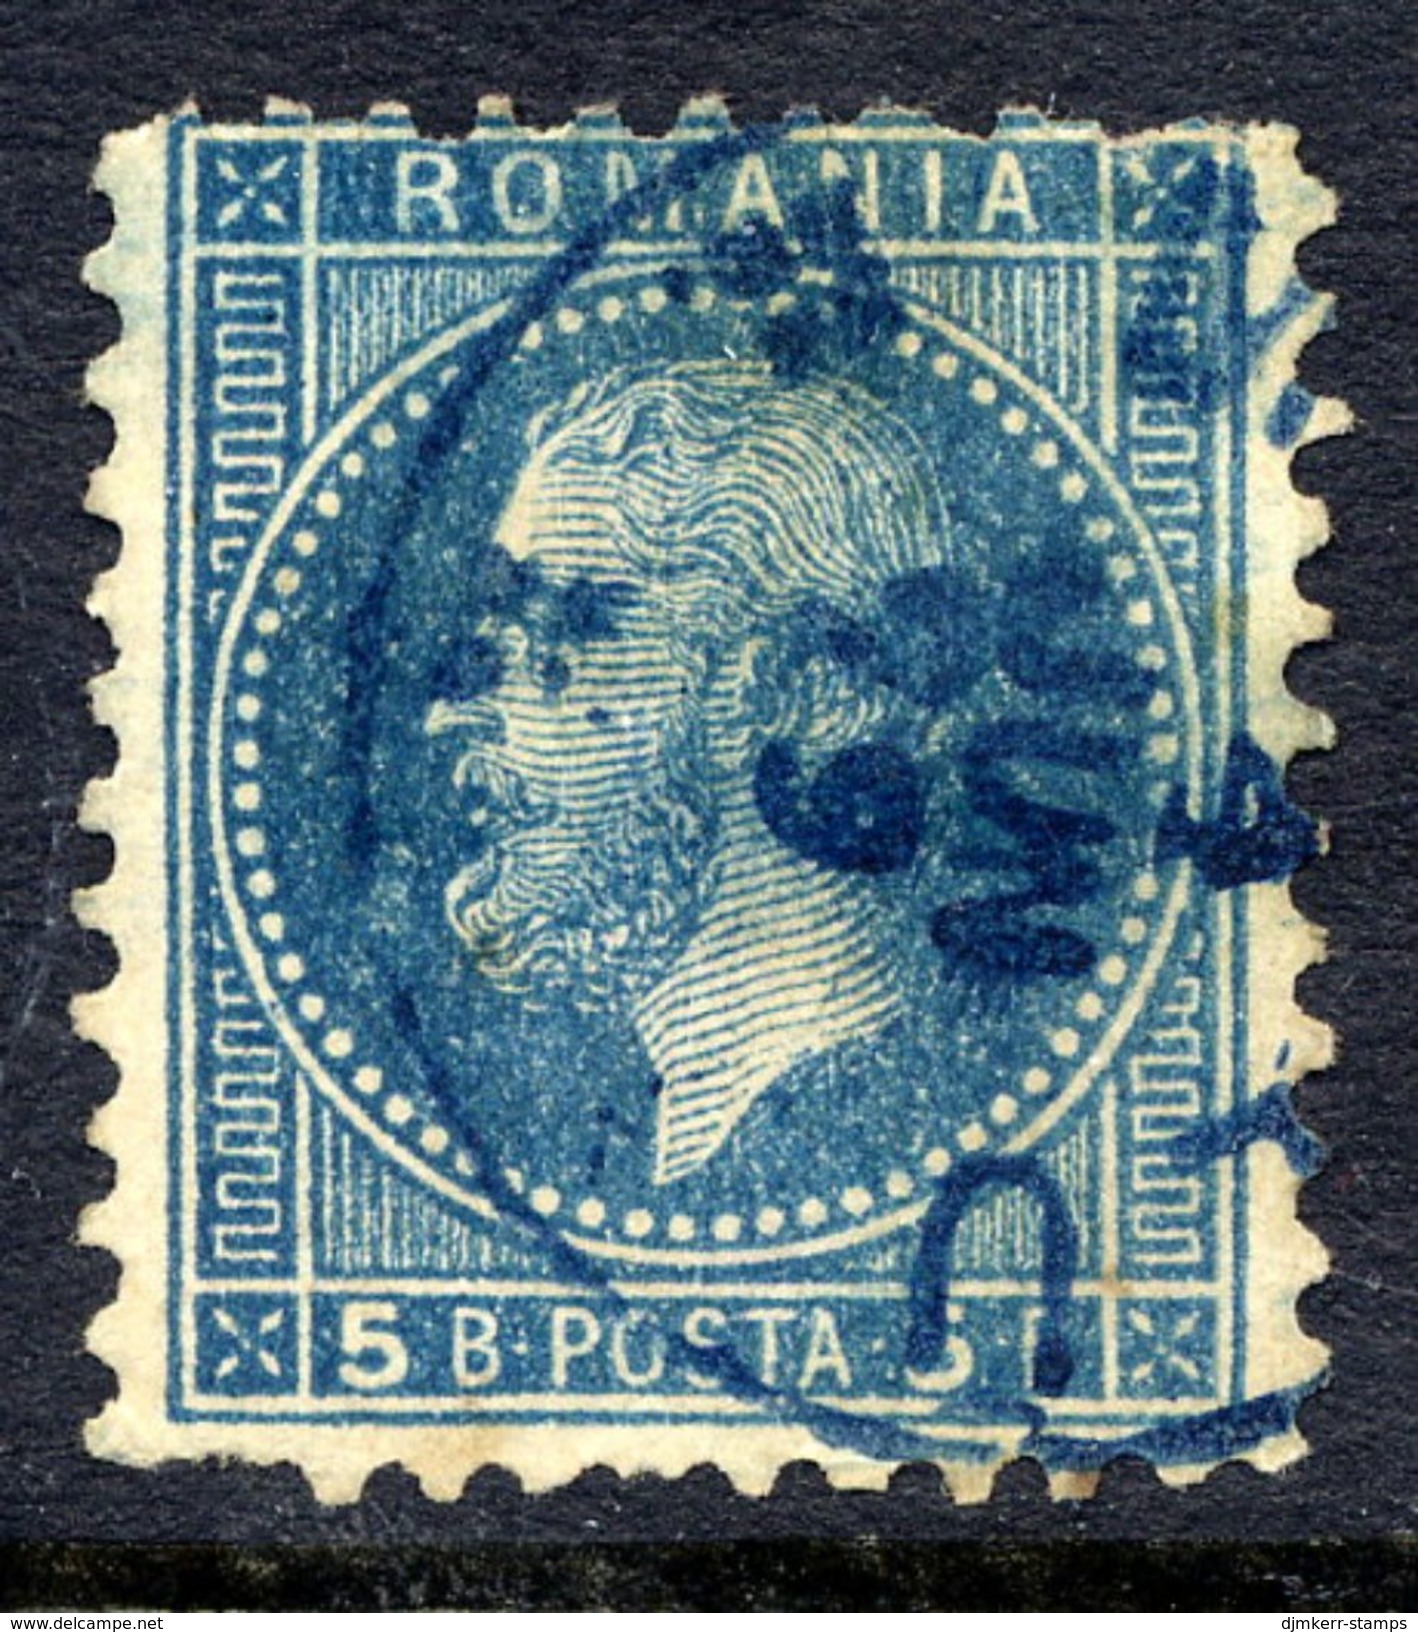 ROMANIA 1876 King Carol 5 B. Error Of Colour Used.  Sg 114ea,  Michel 44 F - 1858-1880 Moldavie & Principauté